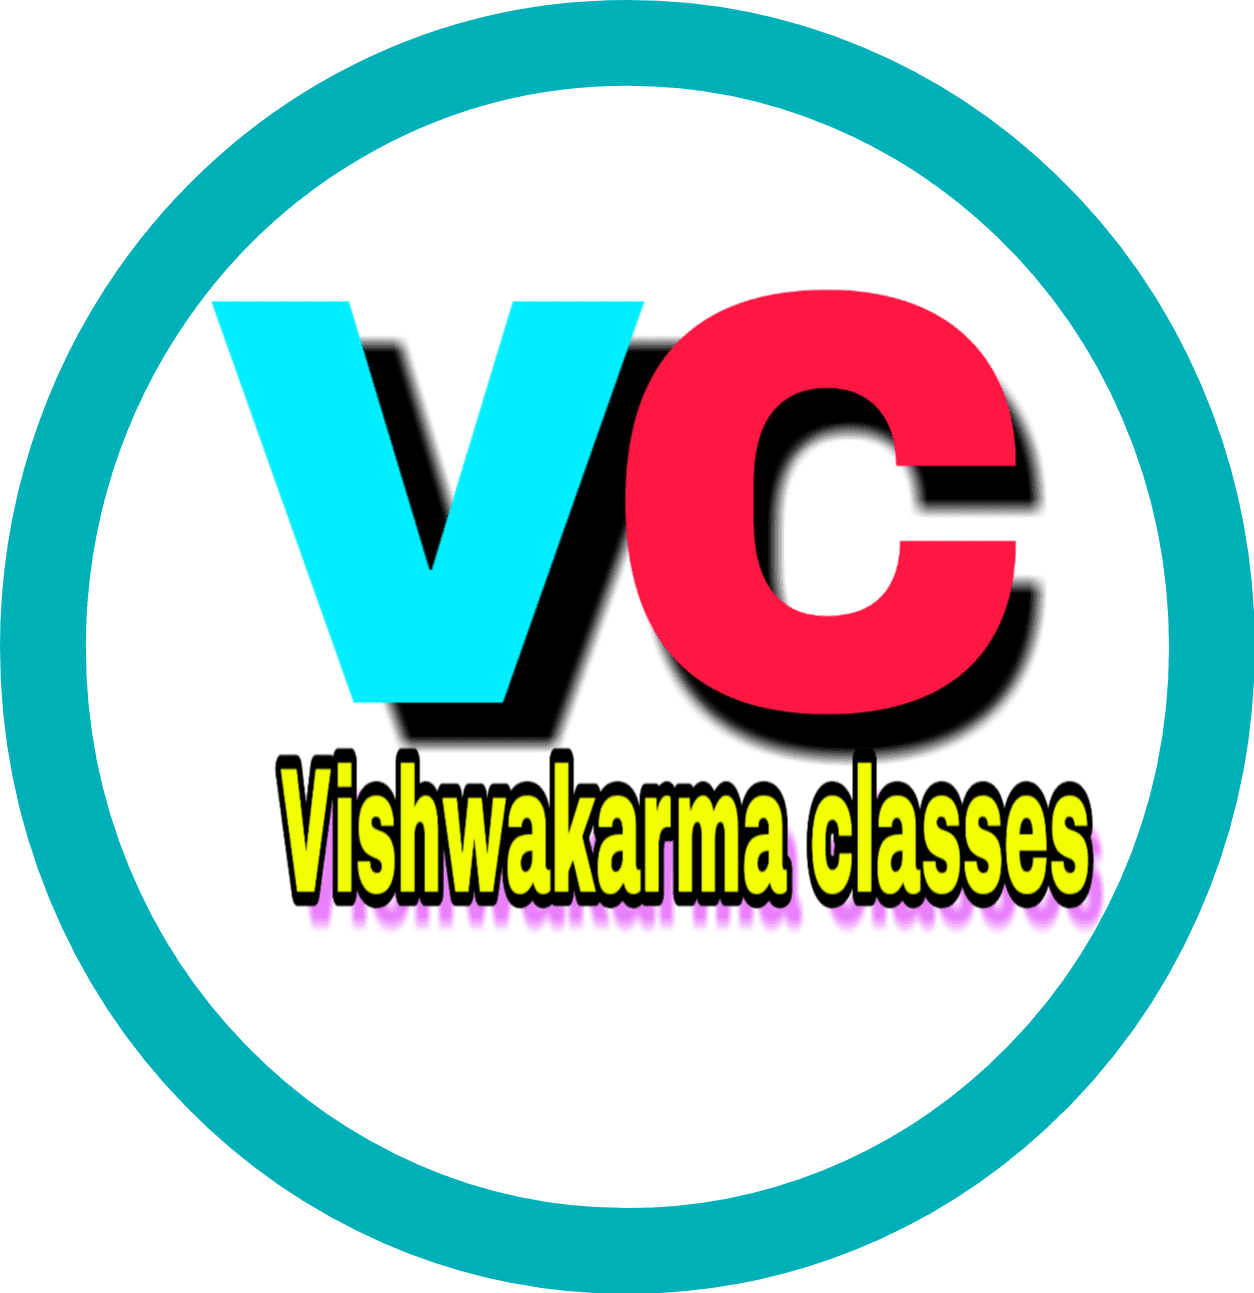 Vishwakarma Classes